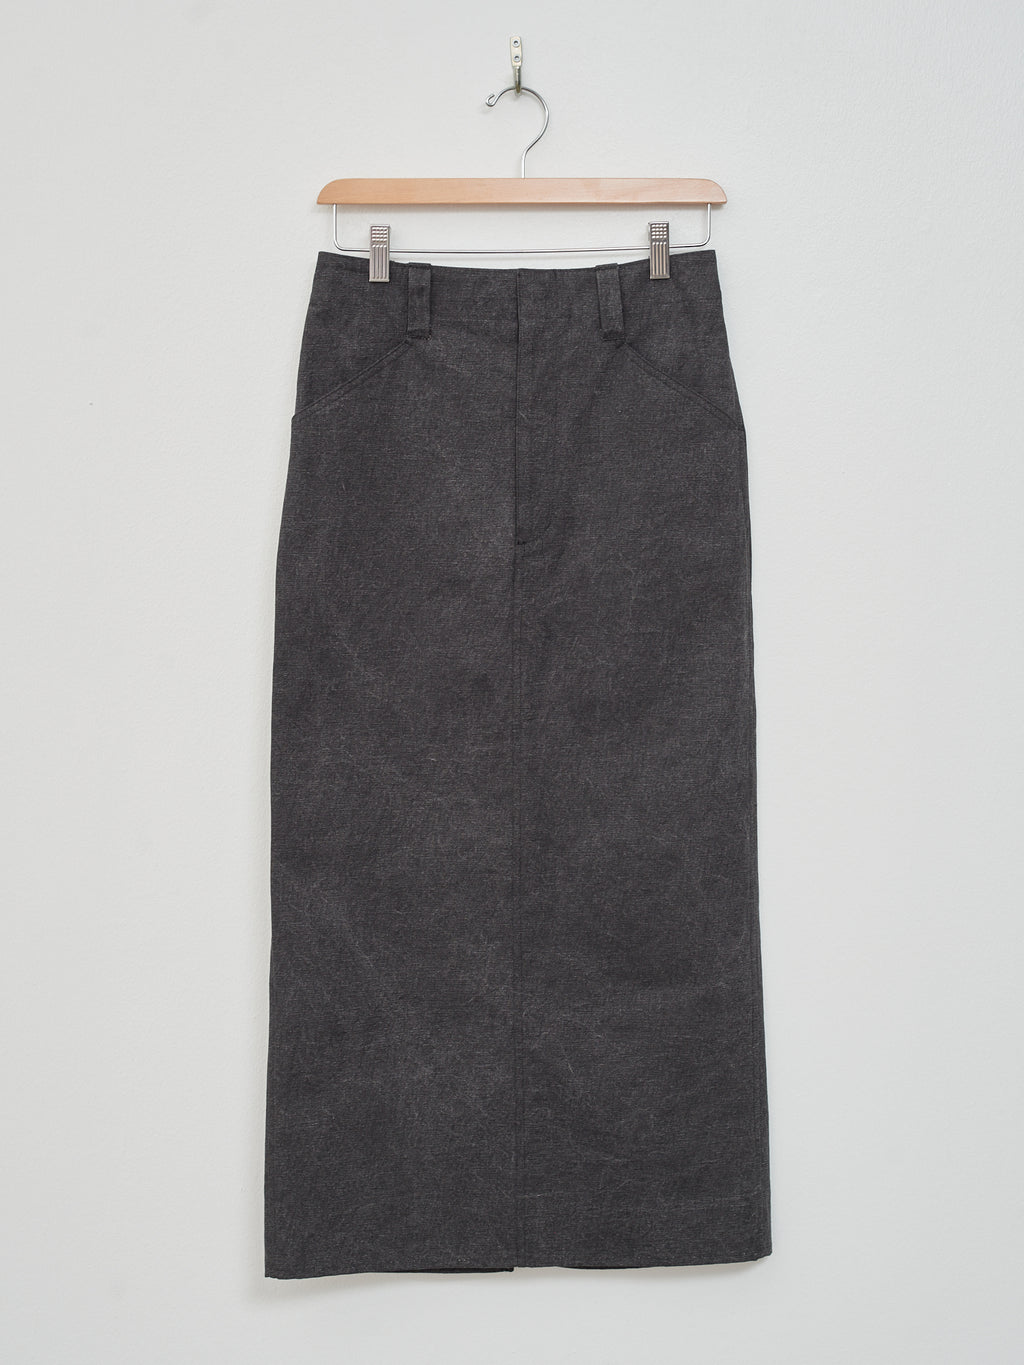 Namu Shop - Auralee Washed Hard Twist Canvas Skirt - Ink Black